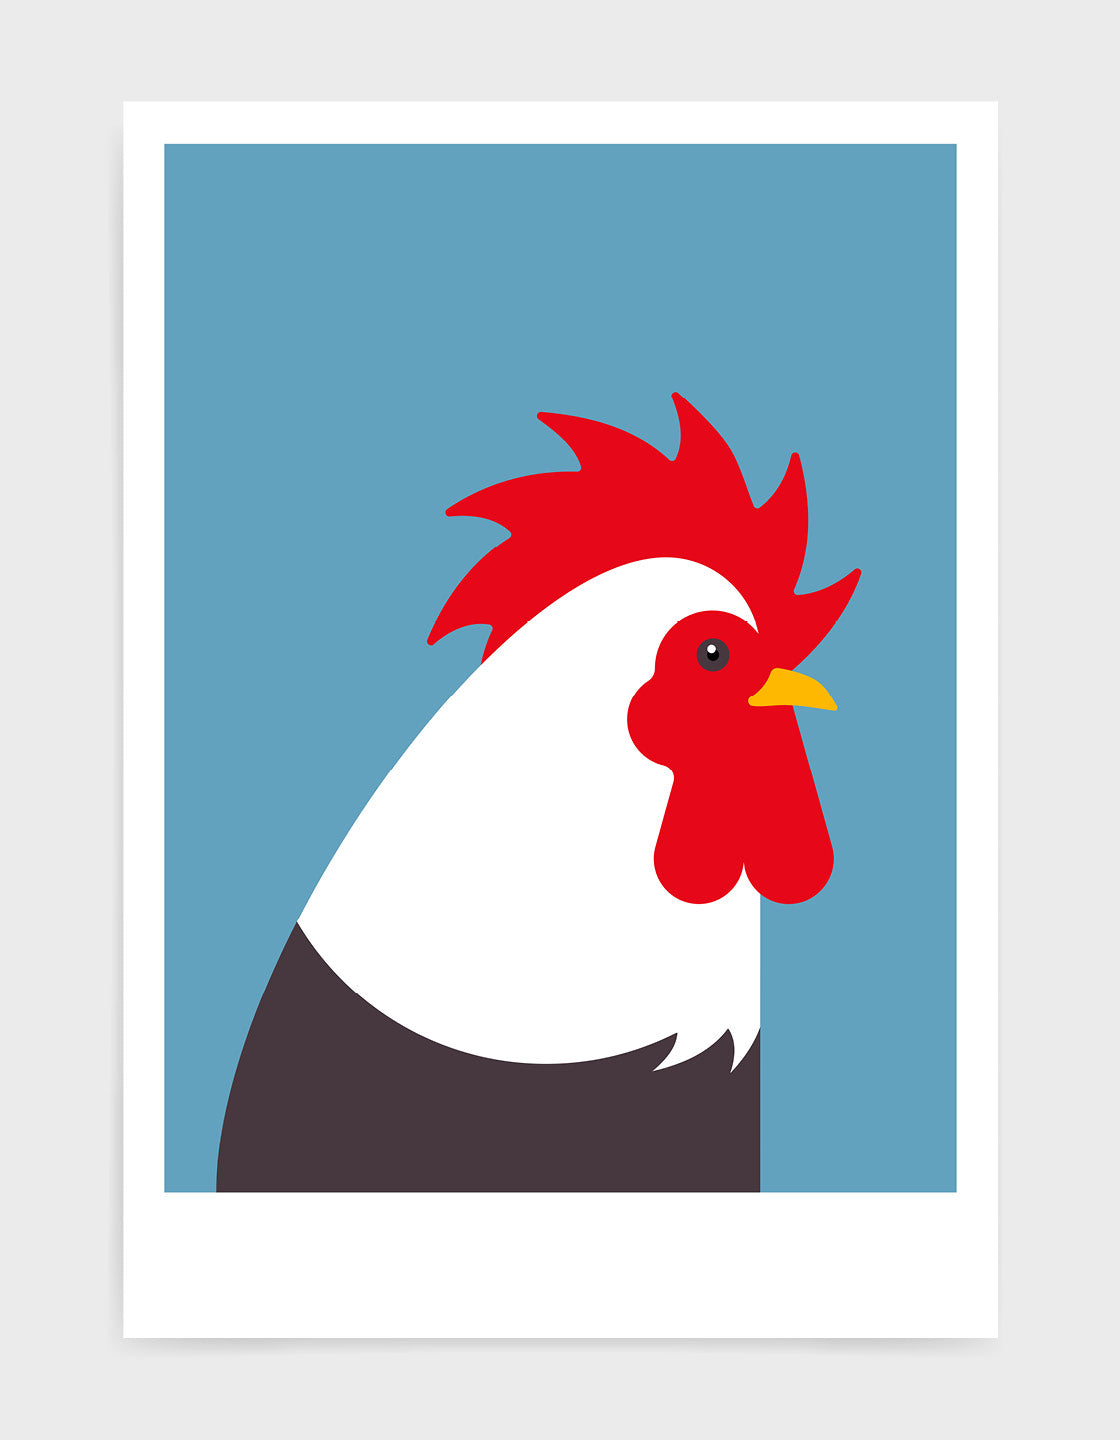 Modern cockerel / chicken illustration against a sky blue background